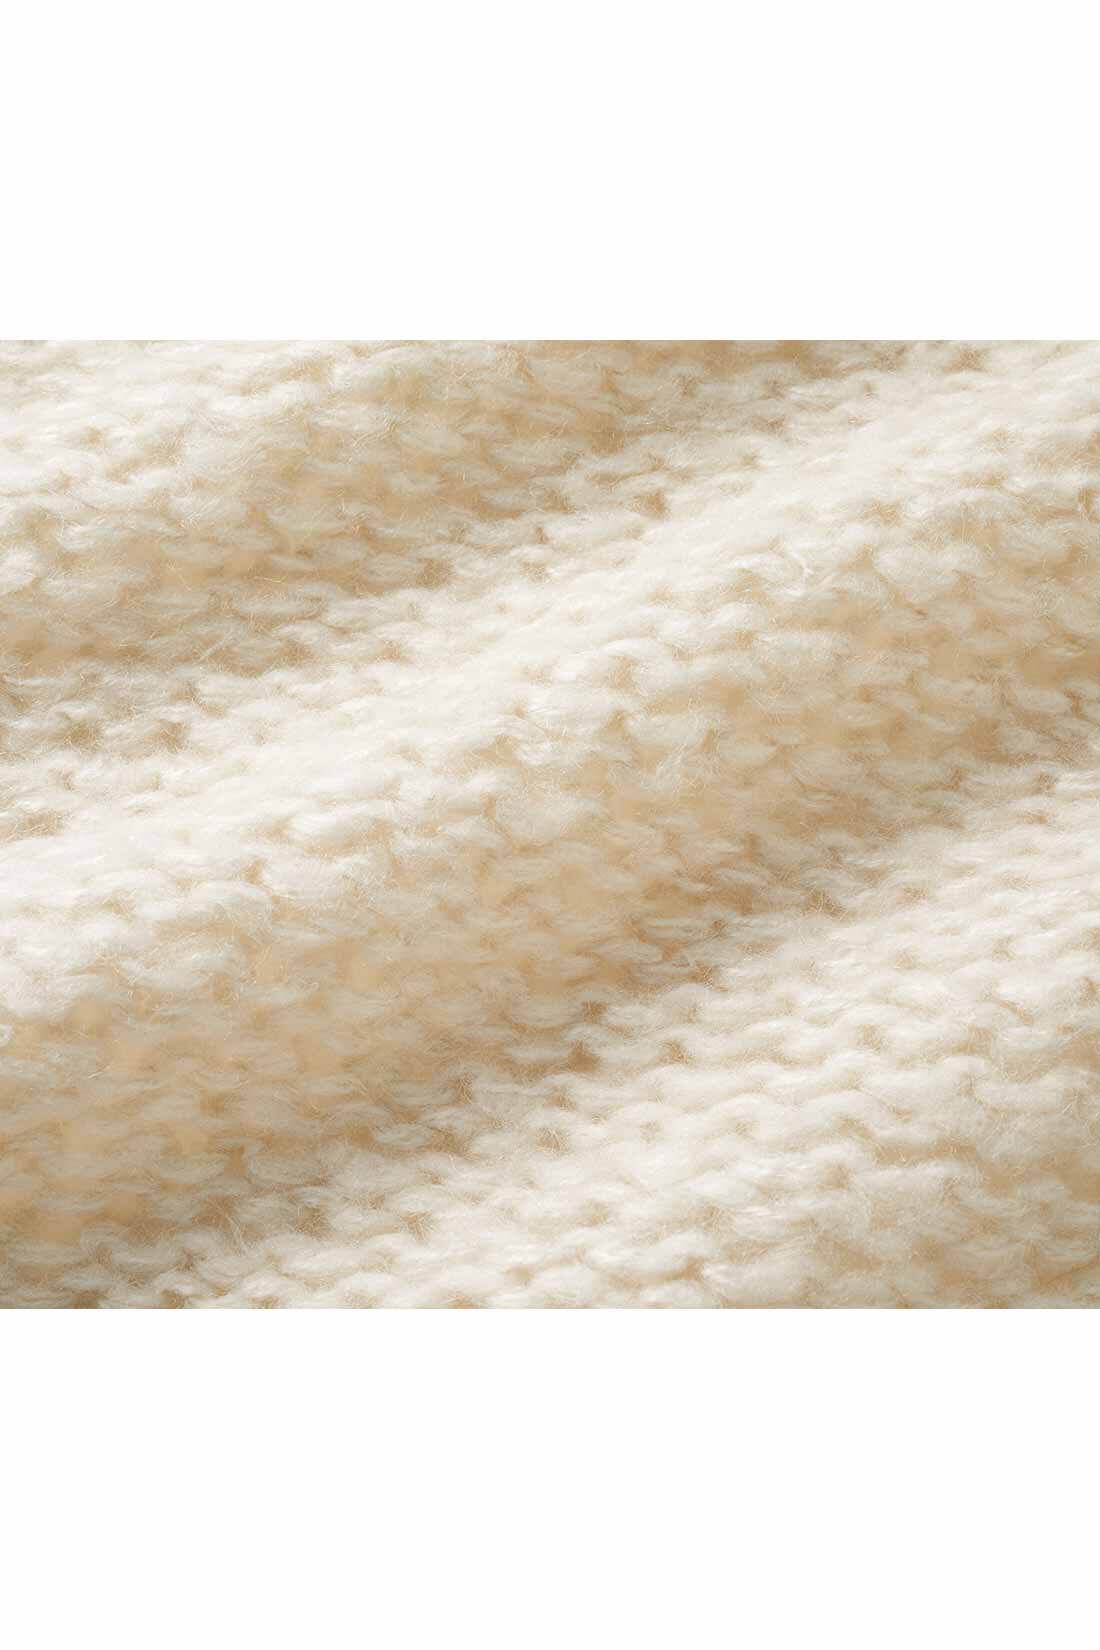 IEDIT[イディット]　ざっくり編んだ ローゲージニットカーディガン〈セピアブラック〉|空気を多く含む糸で編み上げ、さらに表面を起毛させているのでボリュームがあるのに軽くて暖か。